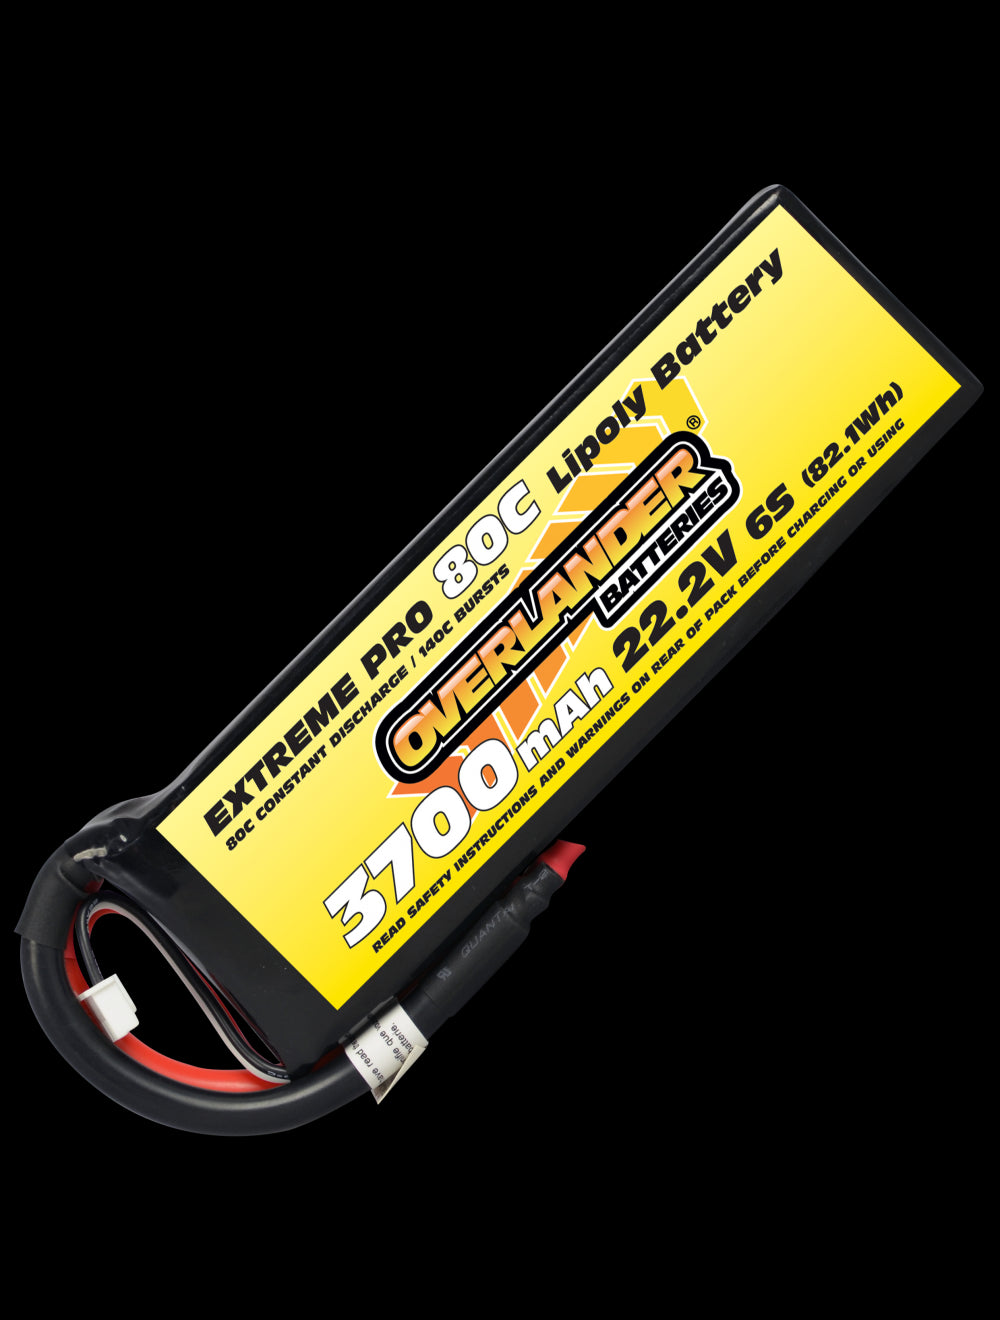 Overlander 3700mAh 22.2V 6S 80C Extreme Pro LiPo Battery - Deans Connector 2900